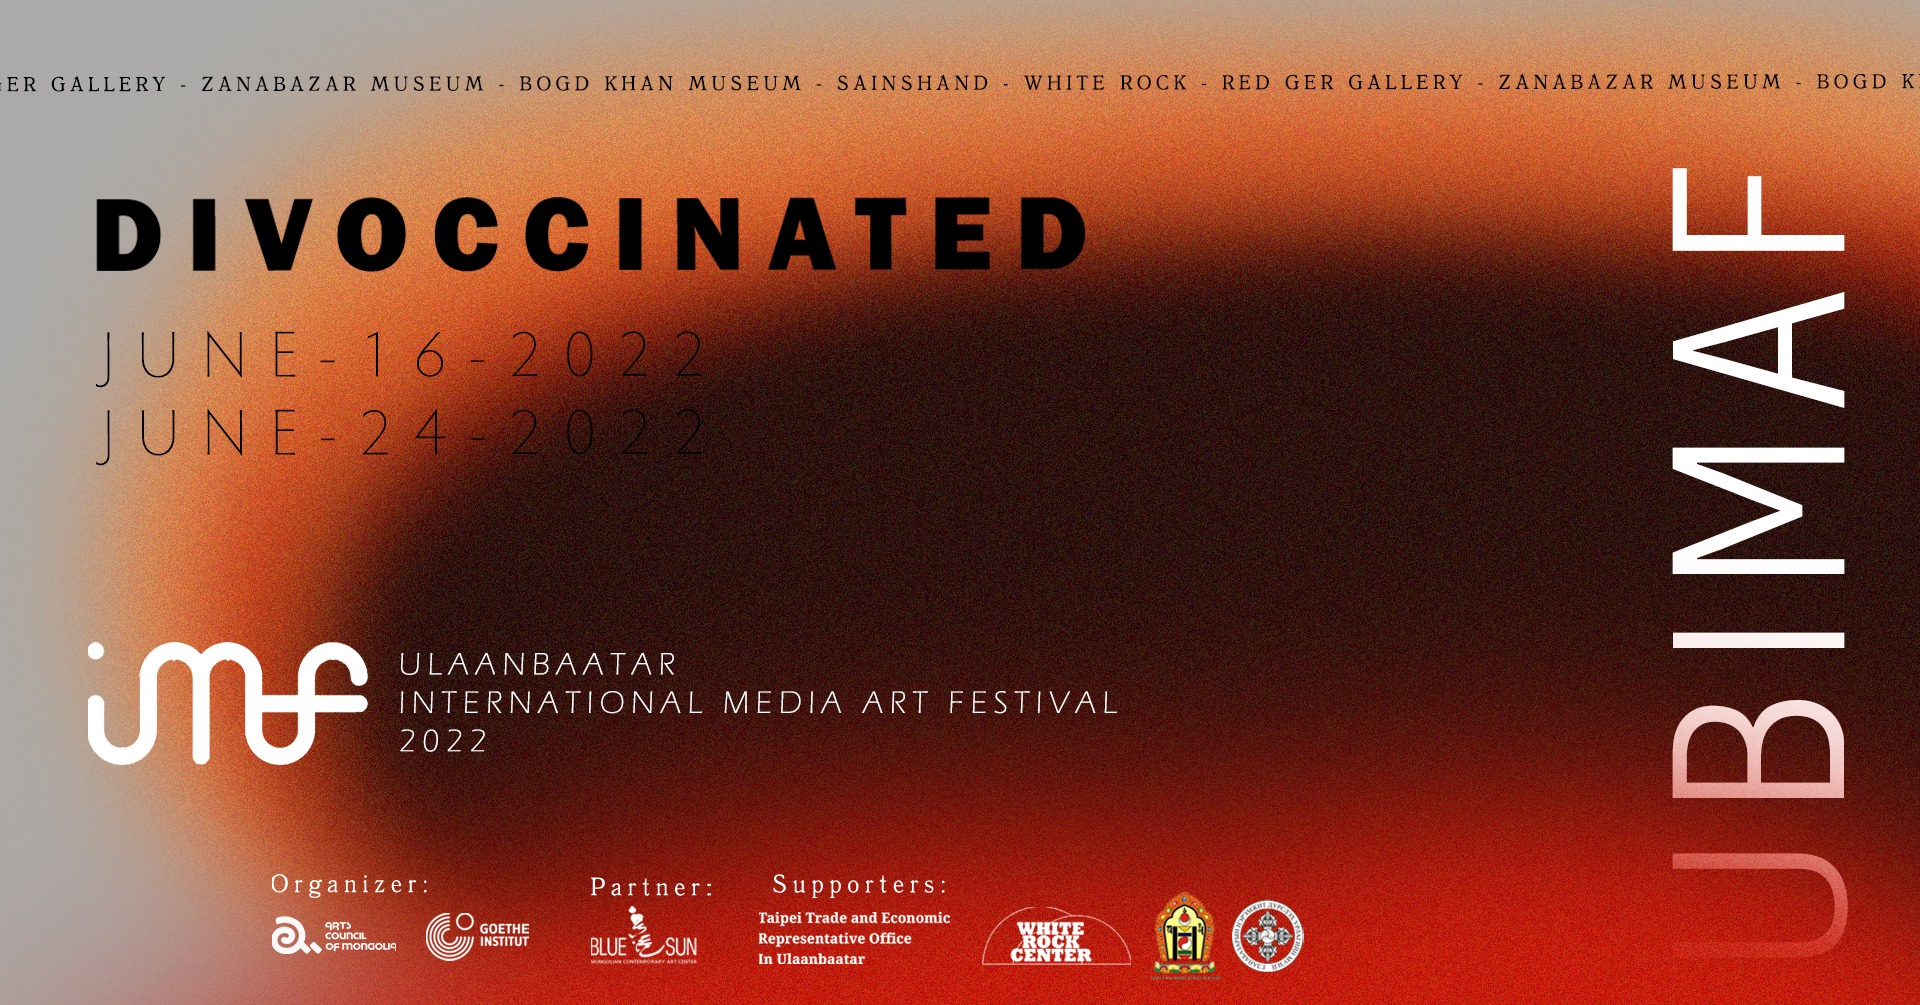 Image of Ulaanbaatar International Media Art Festival poster